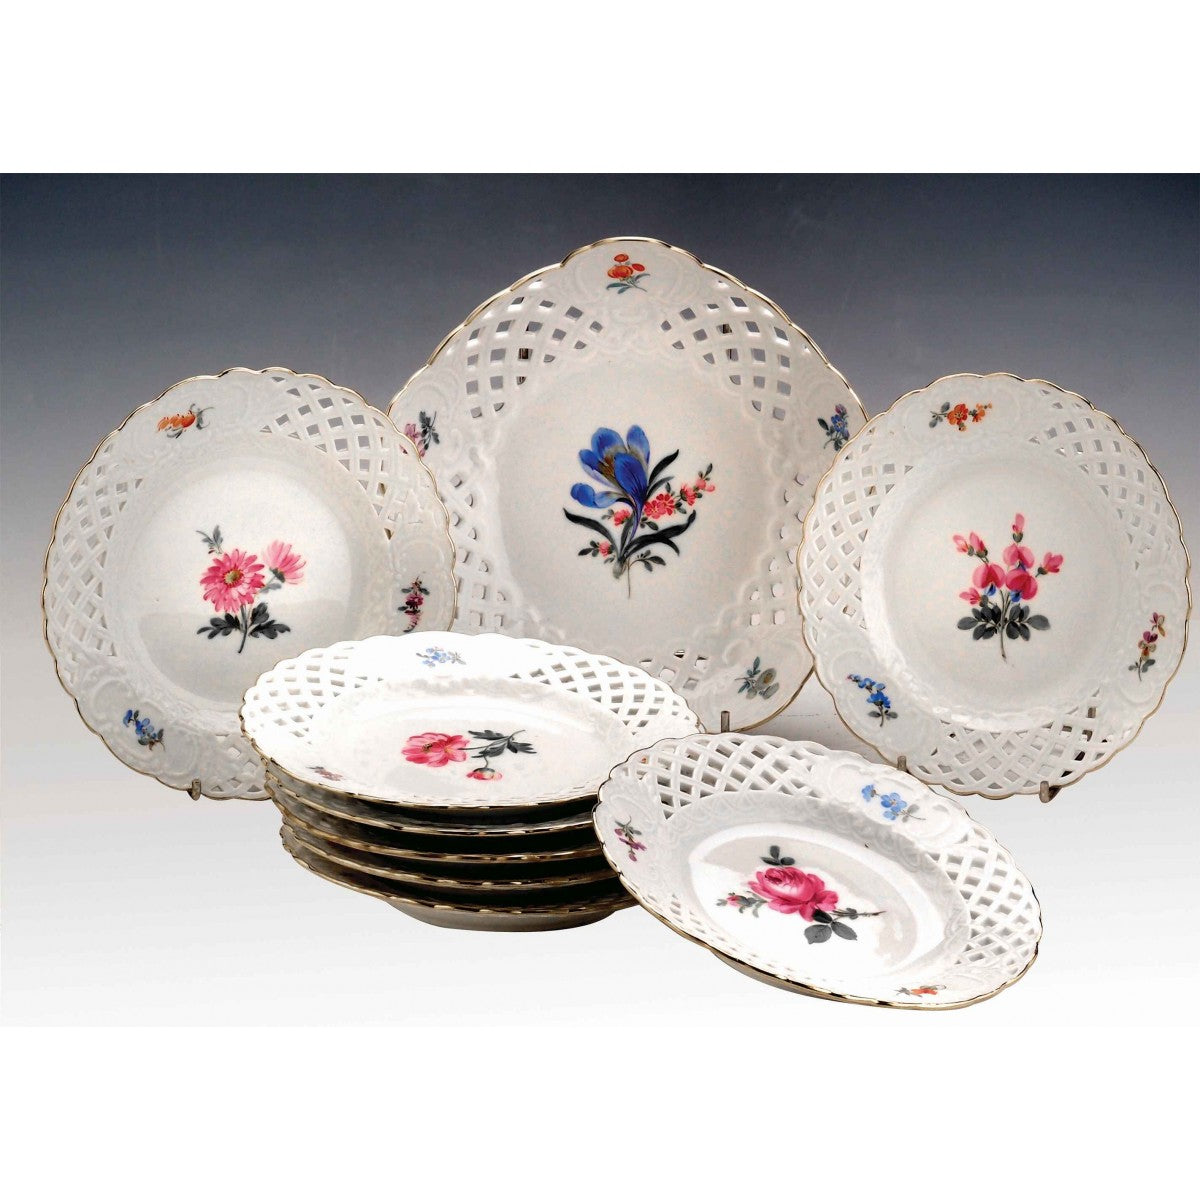 A Meissen Porcelain Dessert Set